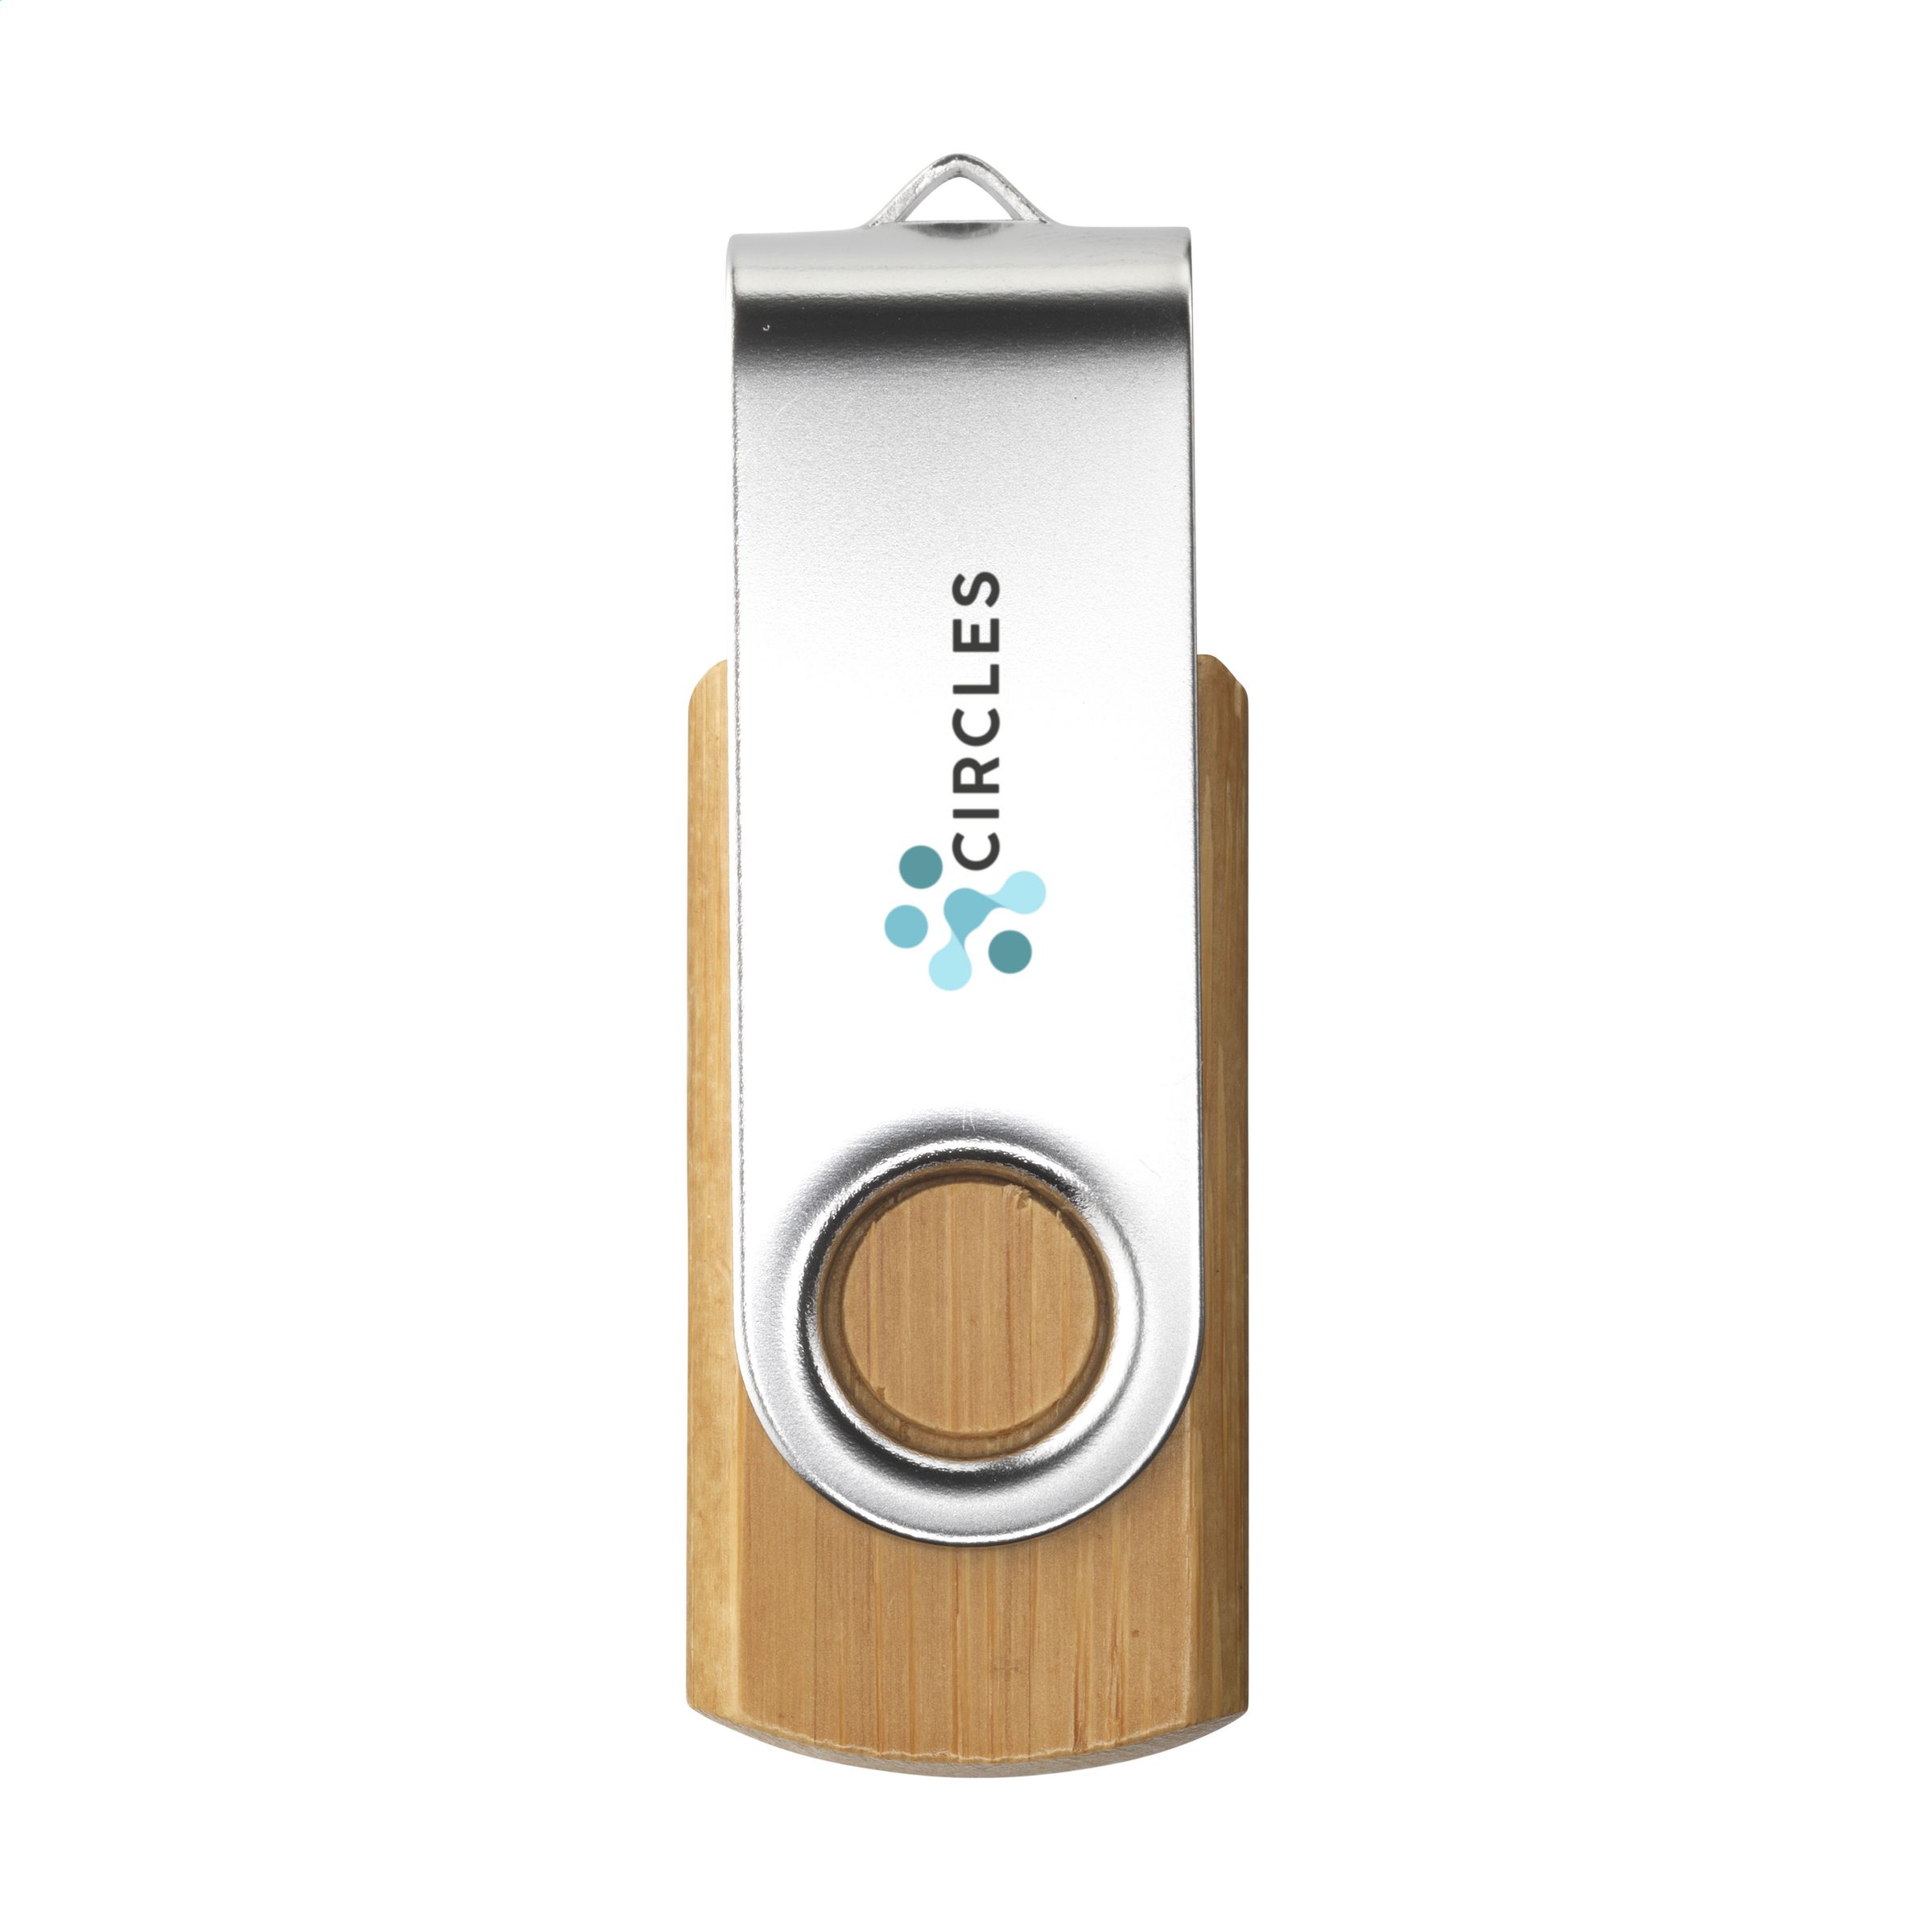 USB Bamboo QuickSave - Île-de-Bréhat - Zaprinta France